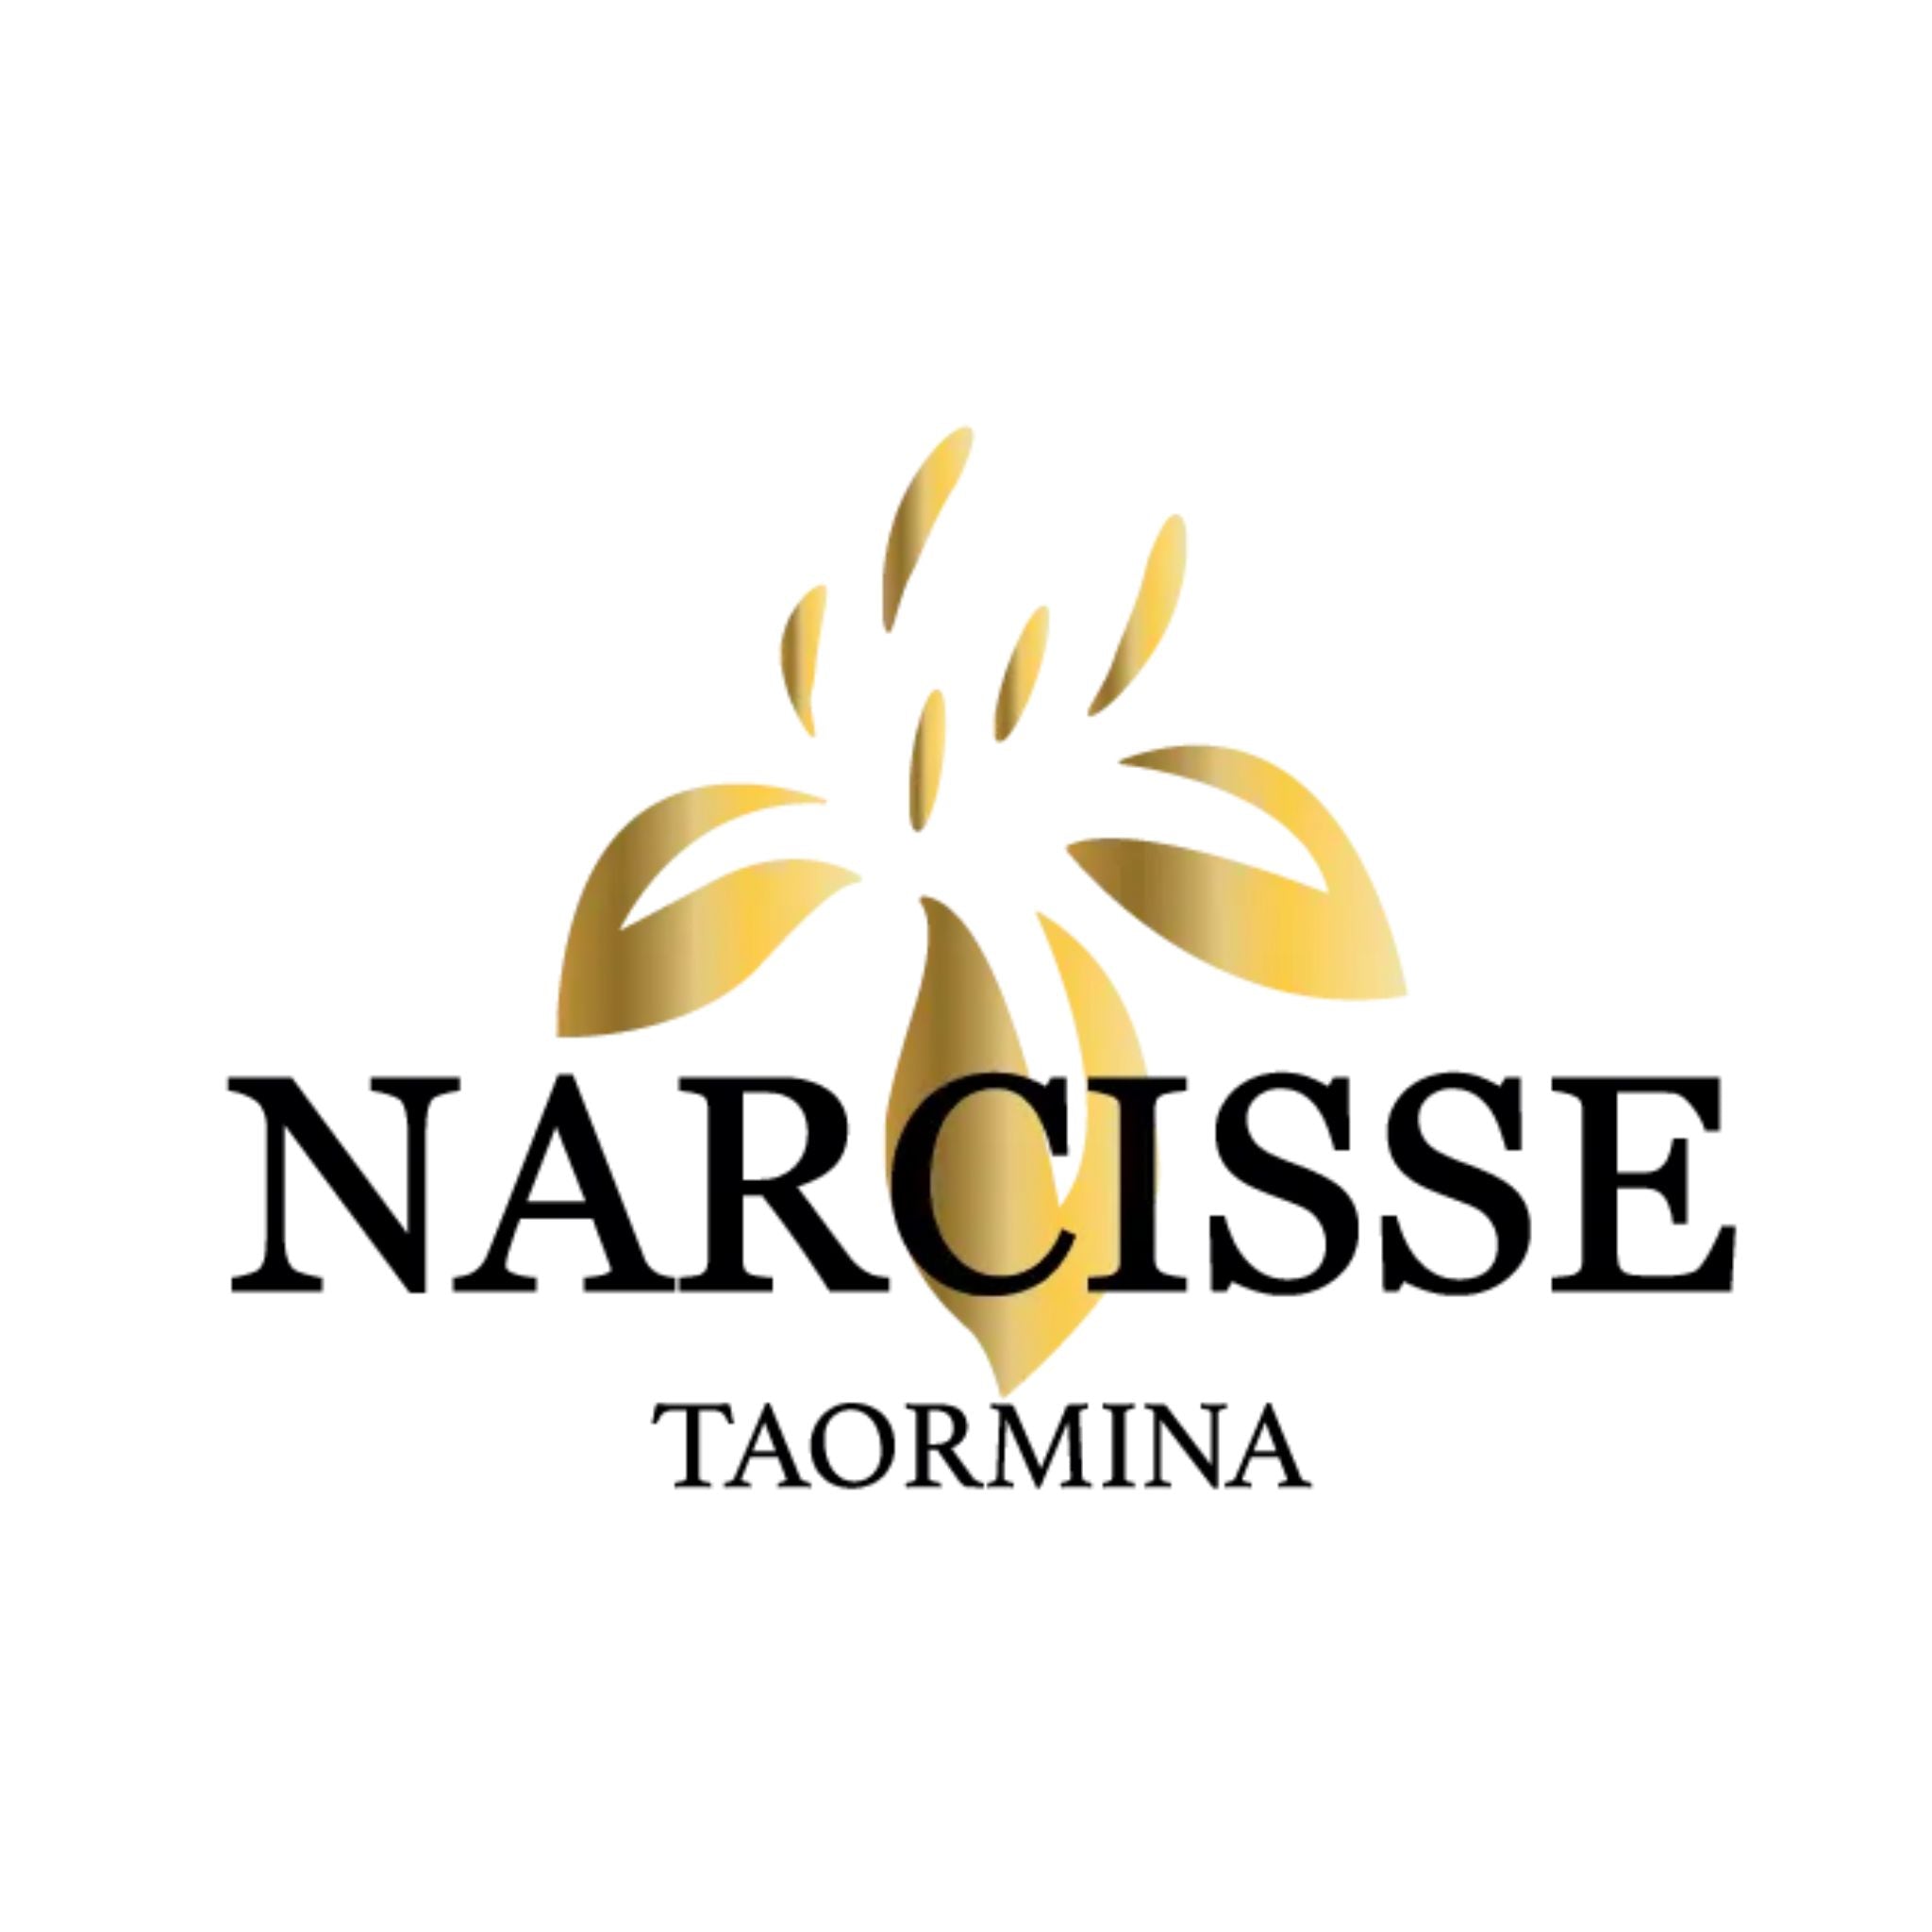 Narcisse Taormina logo